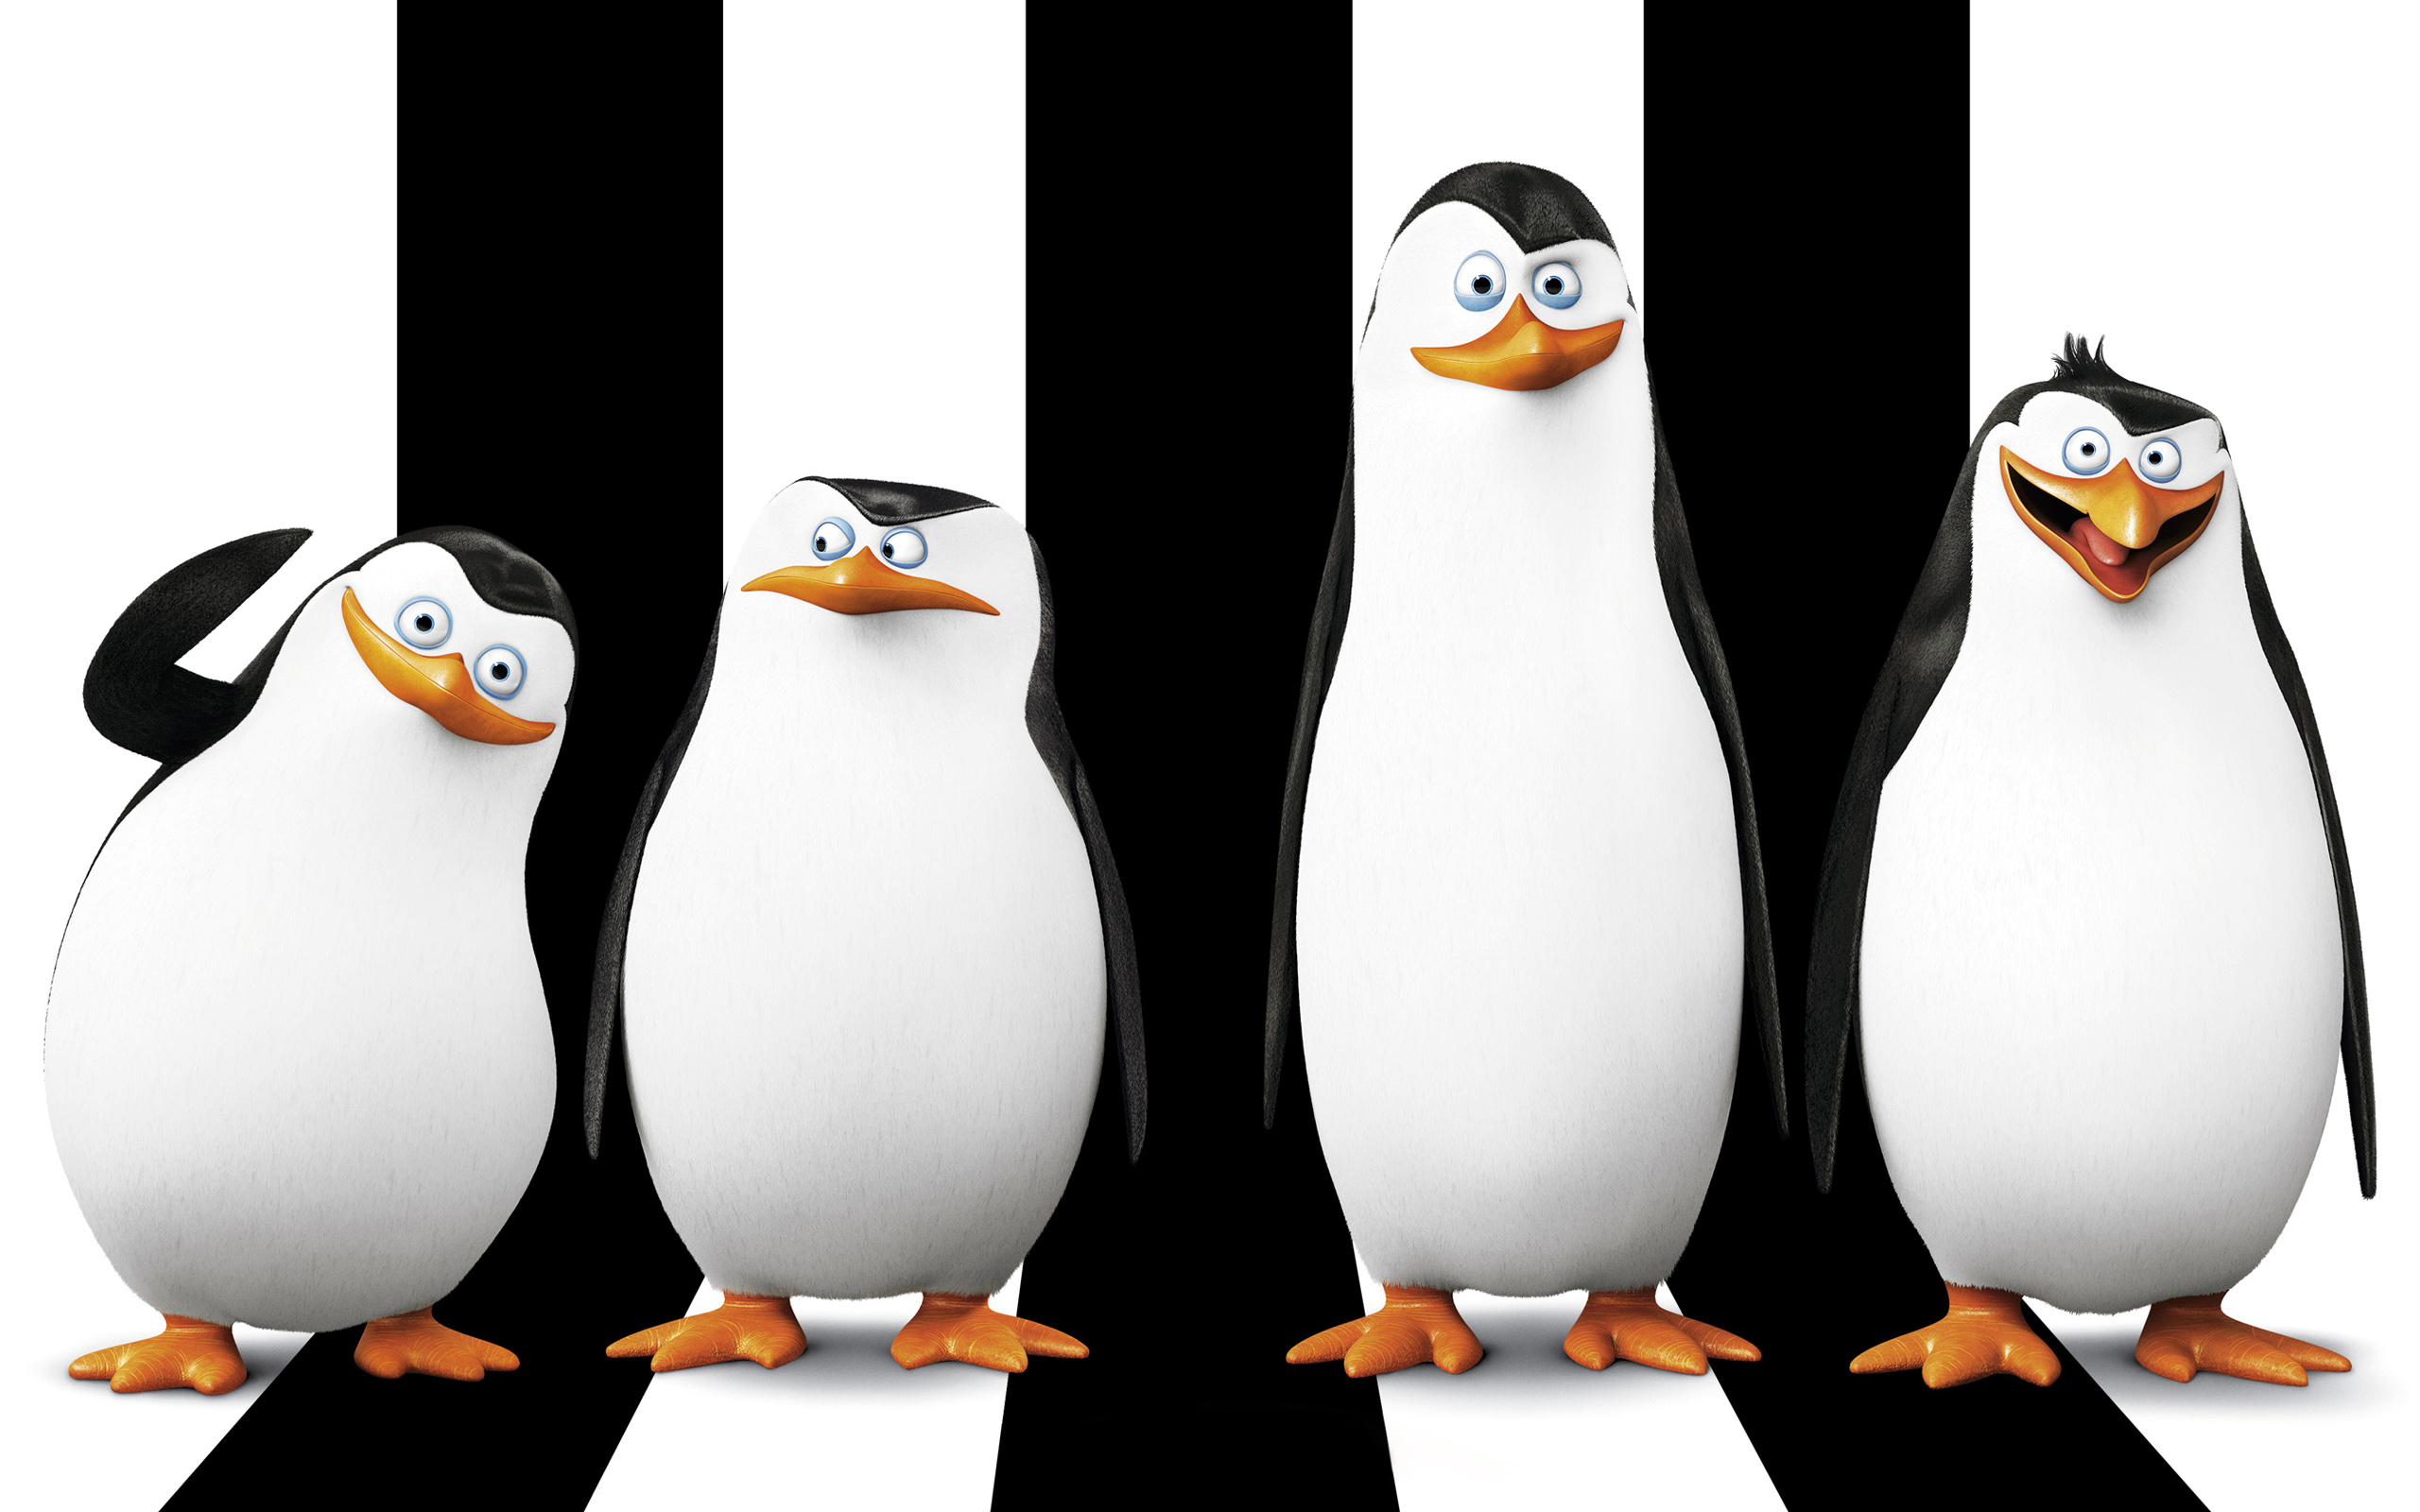 The Penguins Of Madagascar HD wallpapers, Desktop wallpaper - most viewed